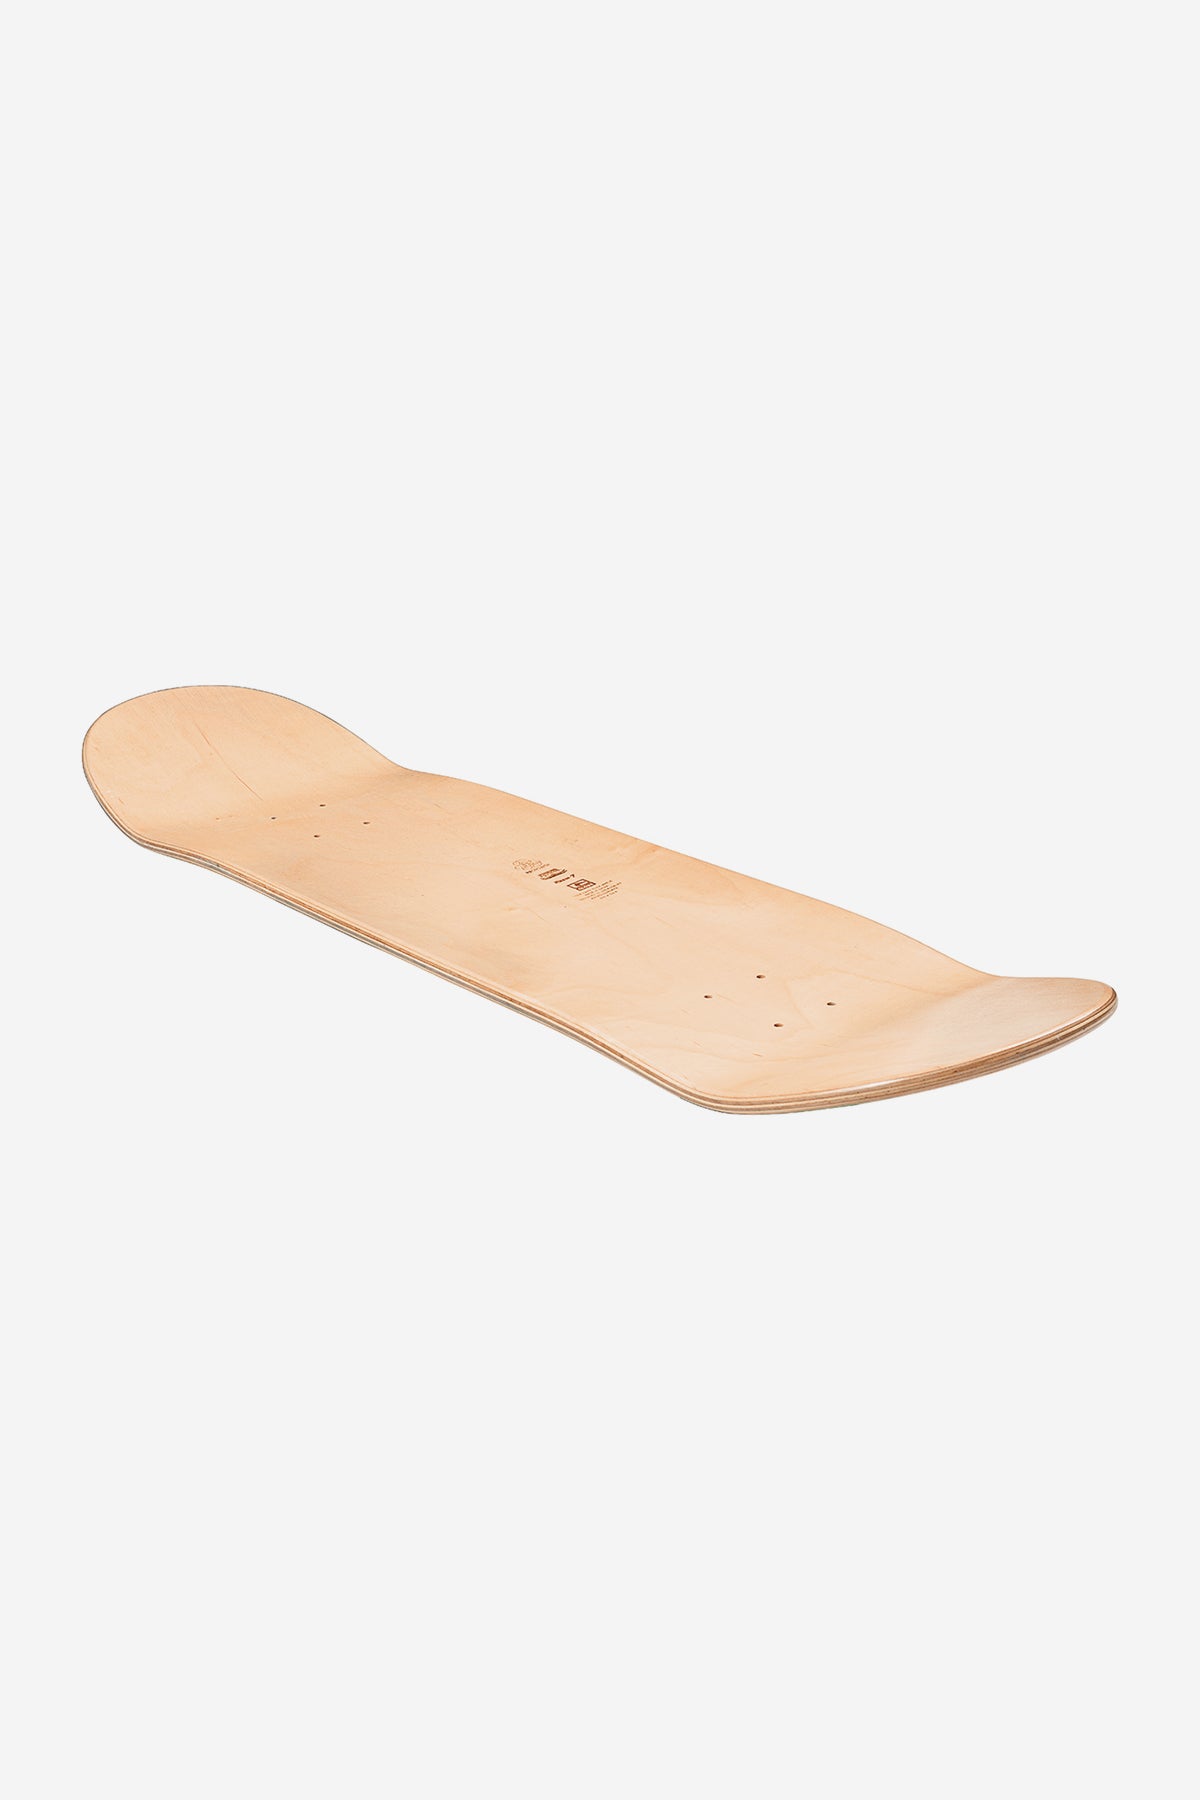 Globe - Goodstock - Sahara - 8.375" Skateboard Deck